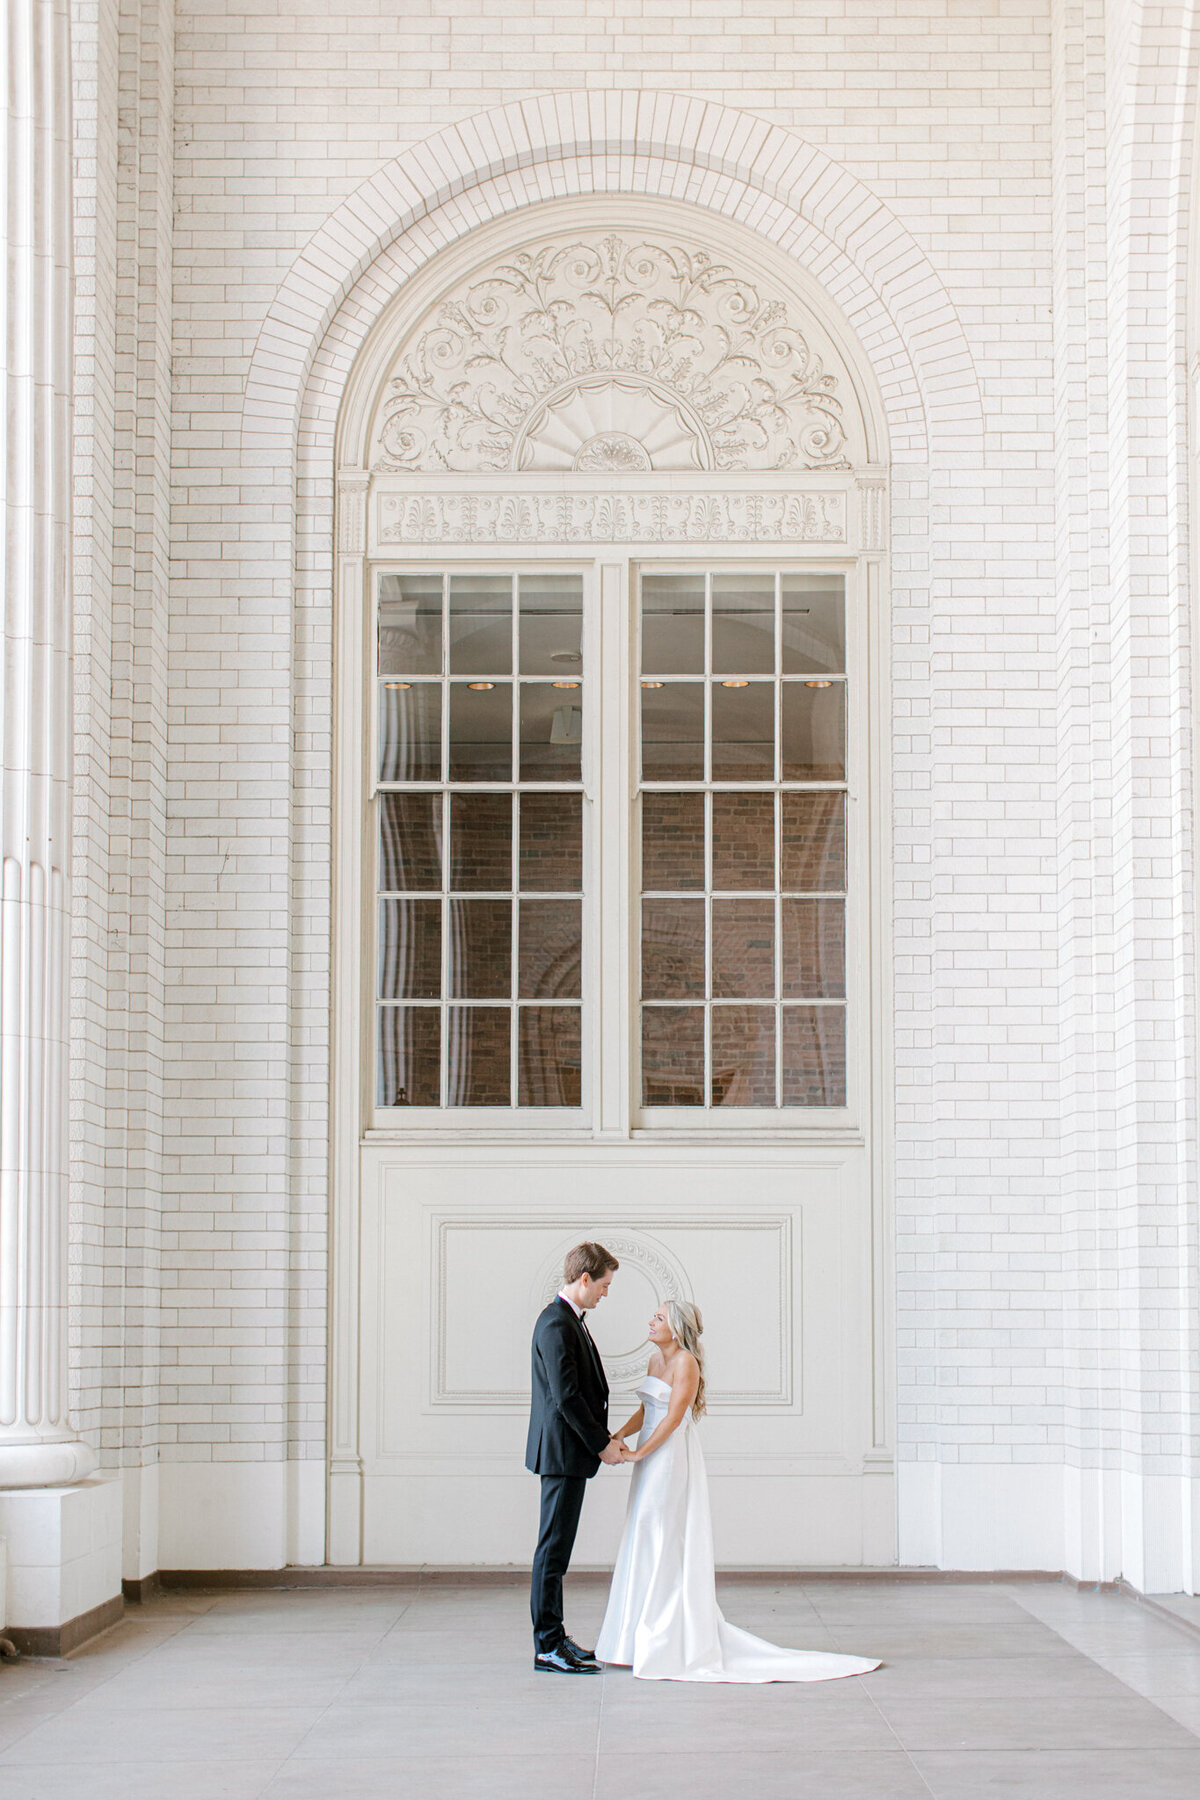 Madison & Michael's Wedding at Union Station | Dallas Wedding Photographer | Sami Kathryn Photography-56